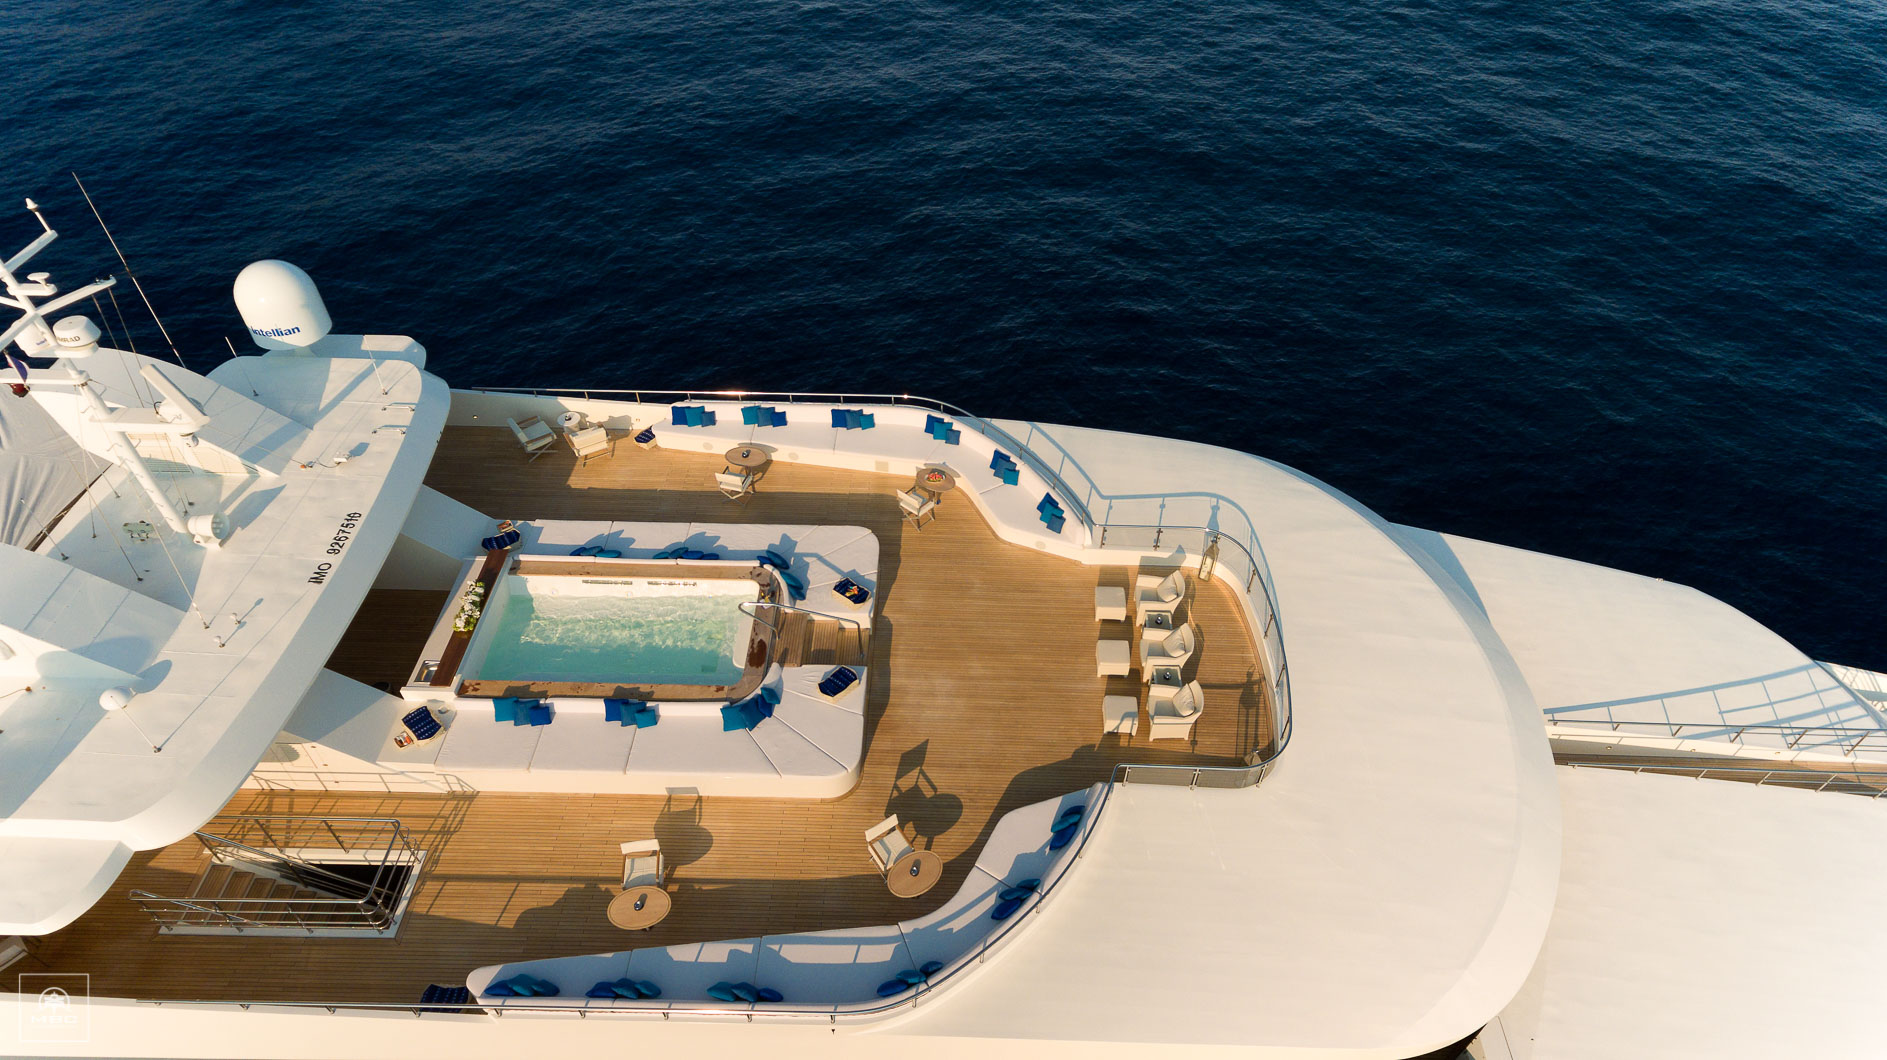 serenity yacht cruises prices